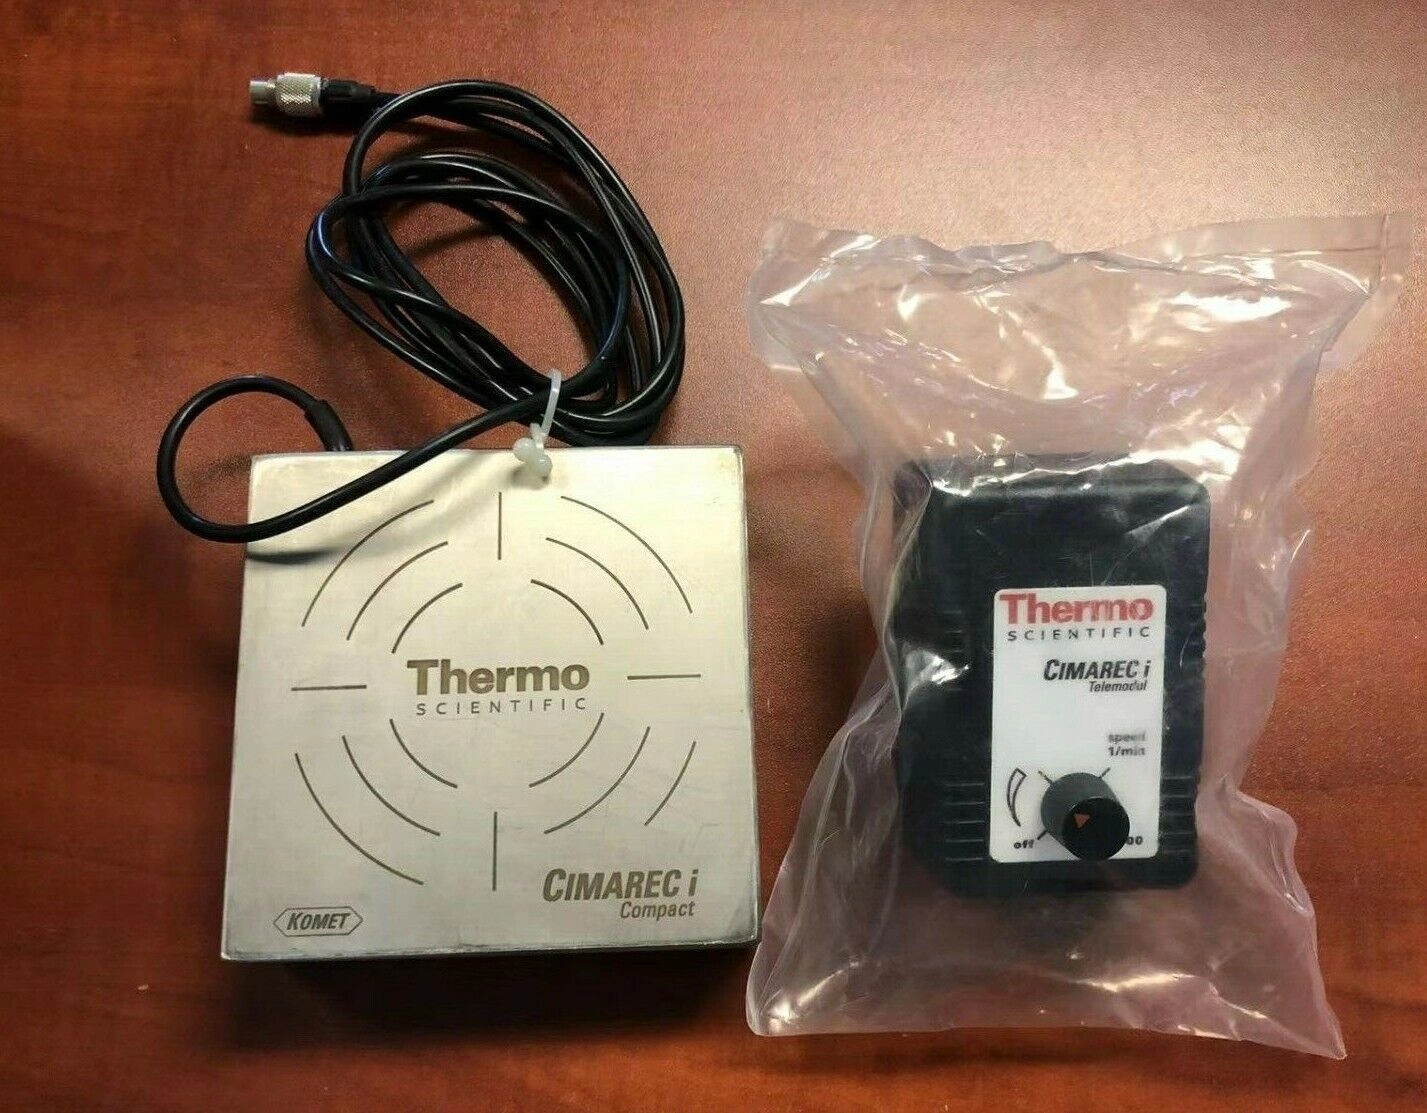 Thermo Cimarec i Compact Stirrer Komet IP68 Washdo